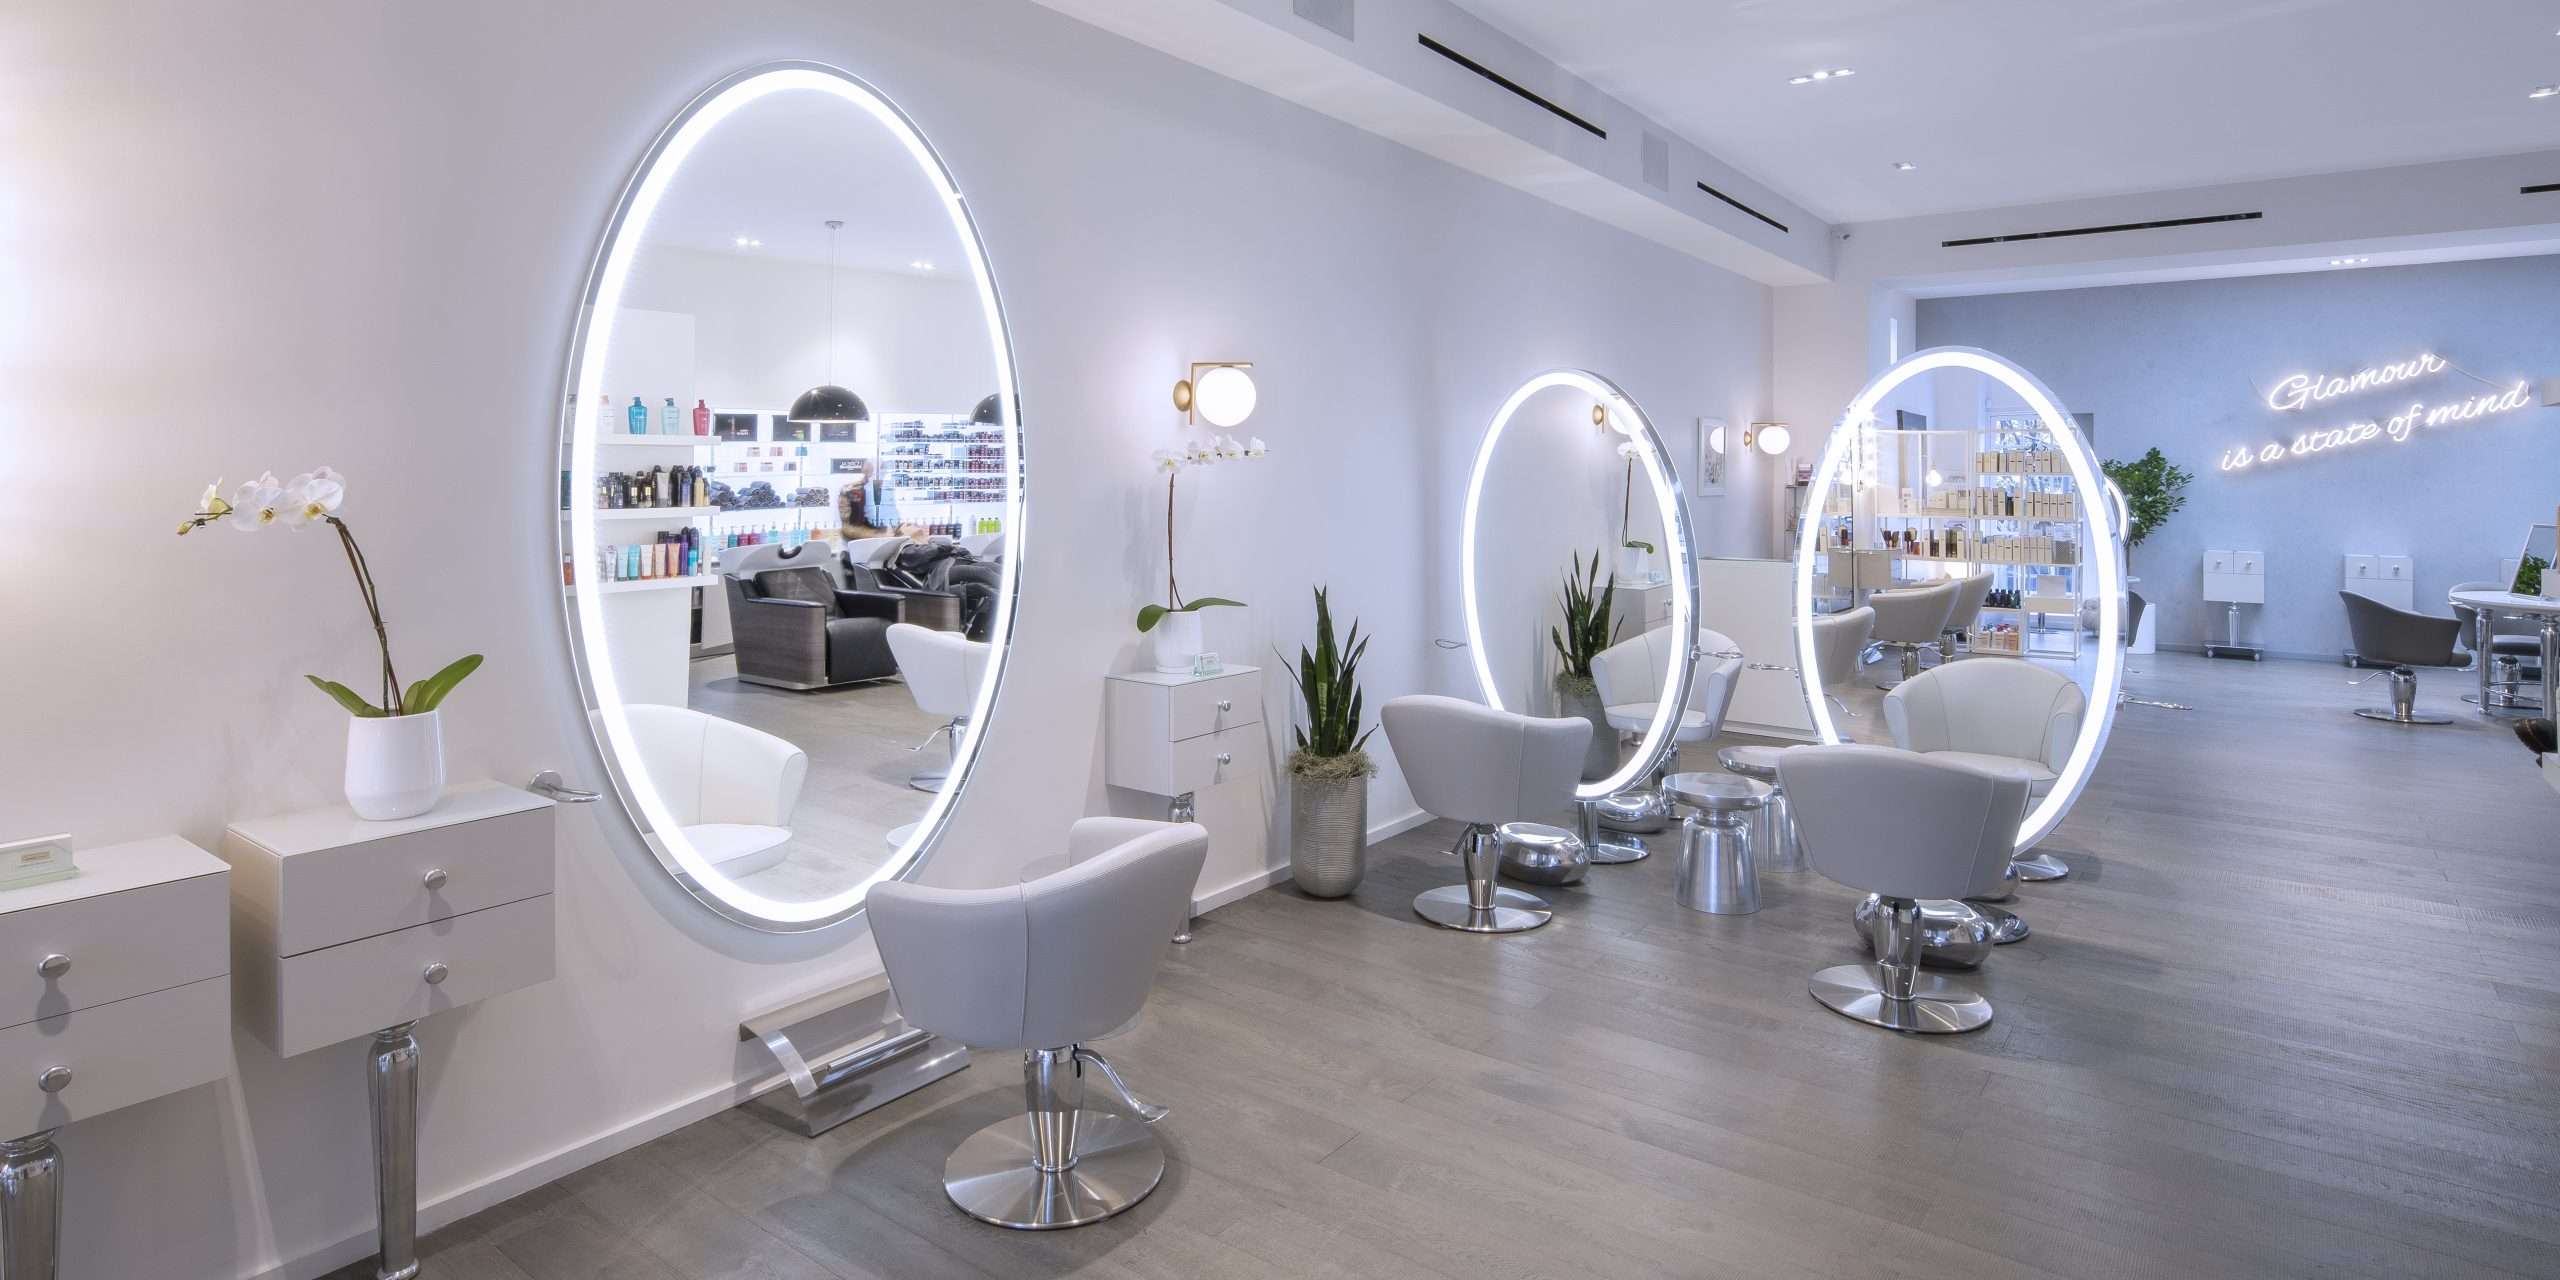 fabio scalia hair salon